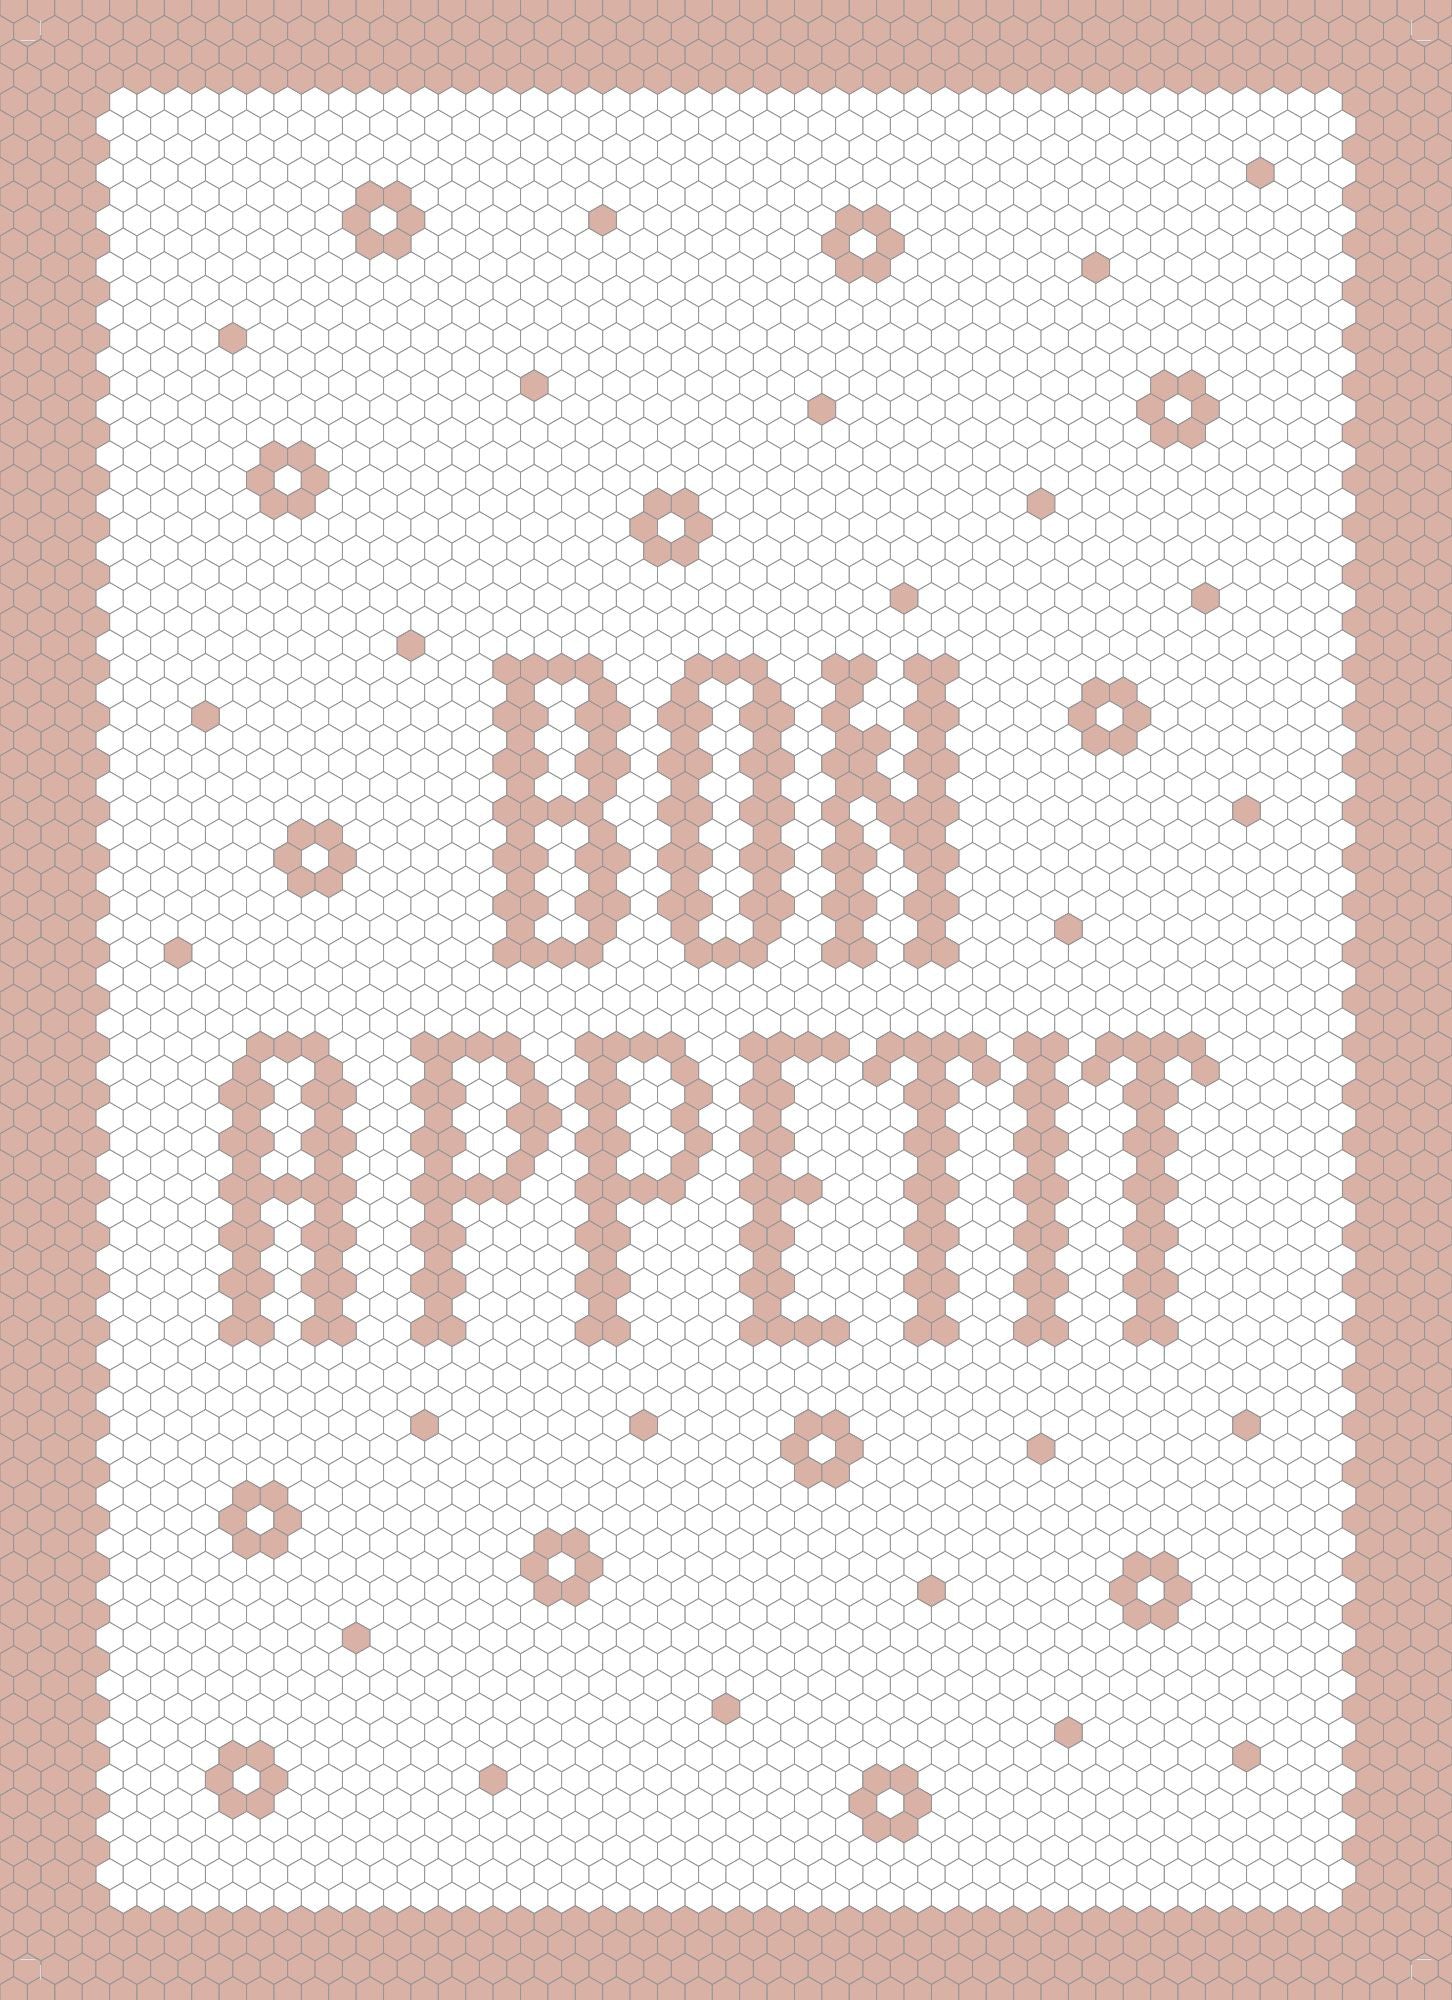 Bon Appetit Tea Towel - PINK